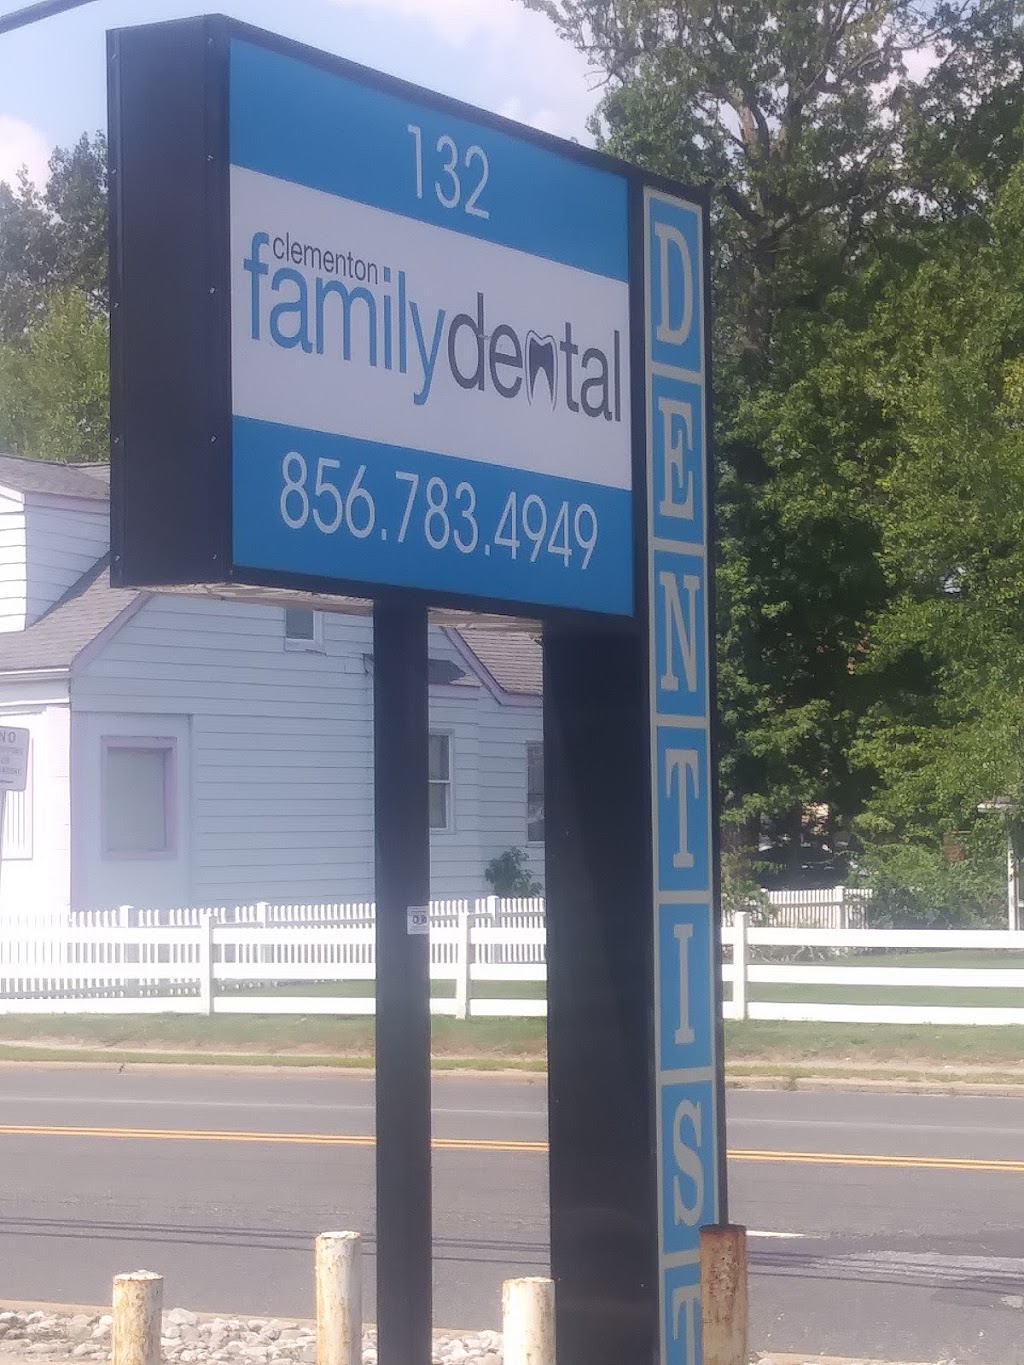 Clementon Family Dentistry: Dr. Kenneth Soffer | 132 White Horse Pike, Clementon, NJ 08021 | Phone: (856) 221-6748